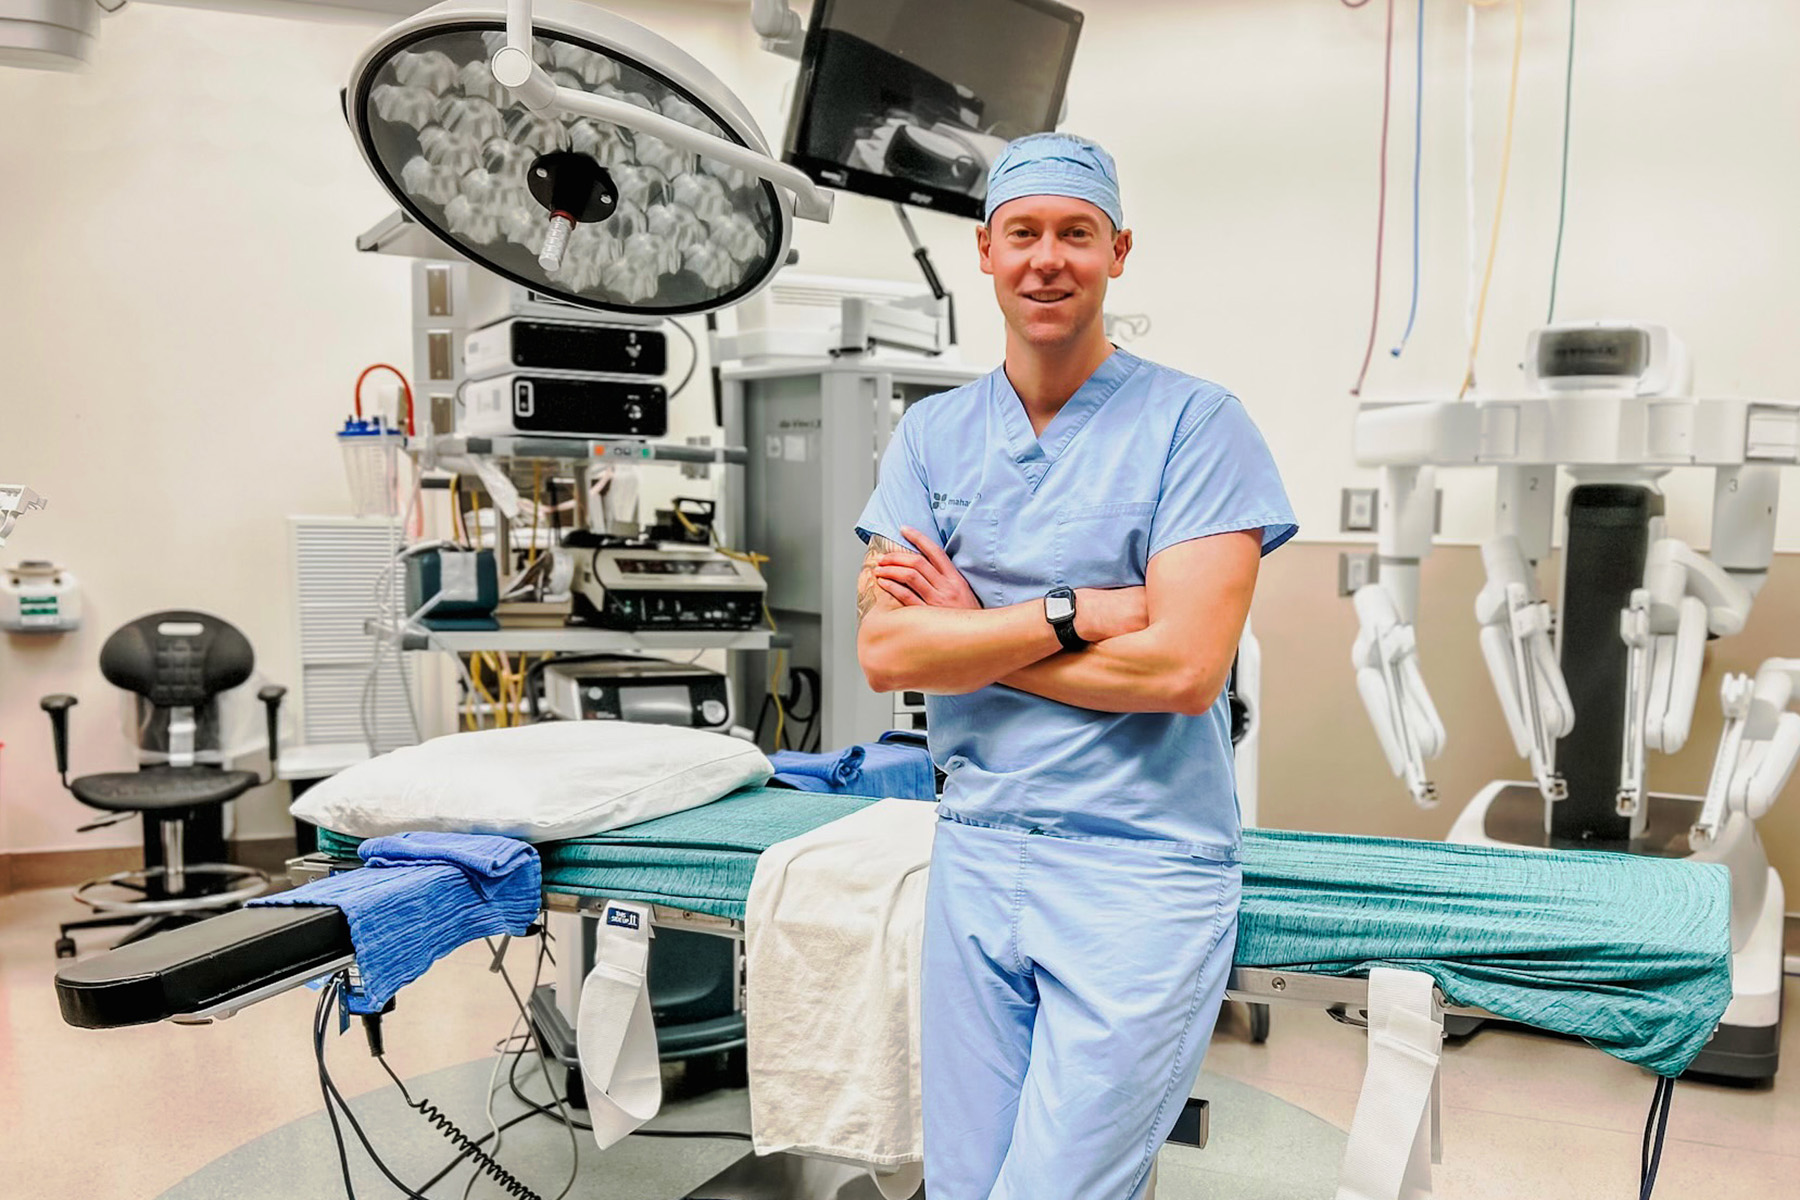 University of Iowa graduate Jesse Van Maanen in a medical setting